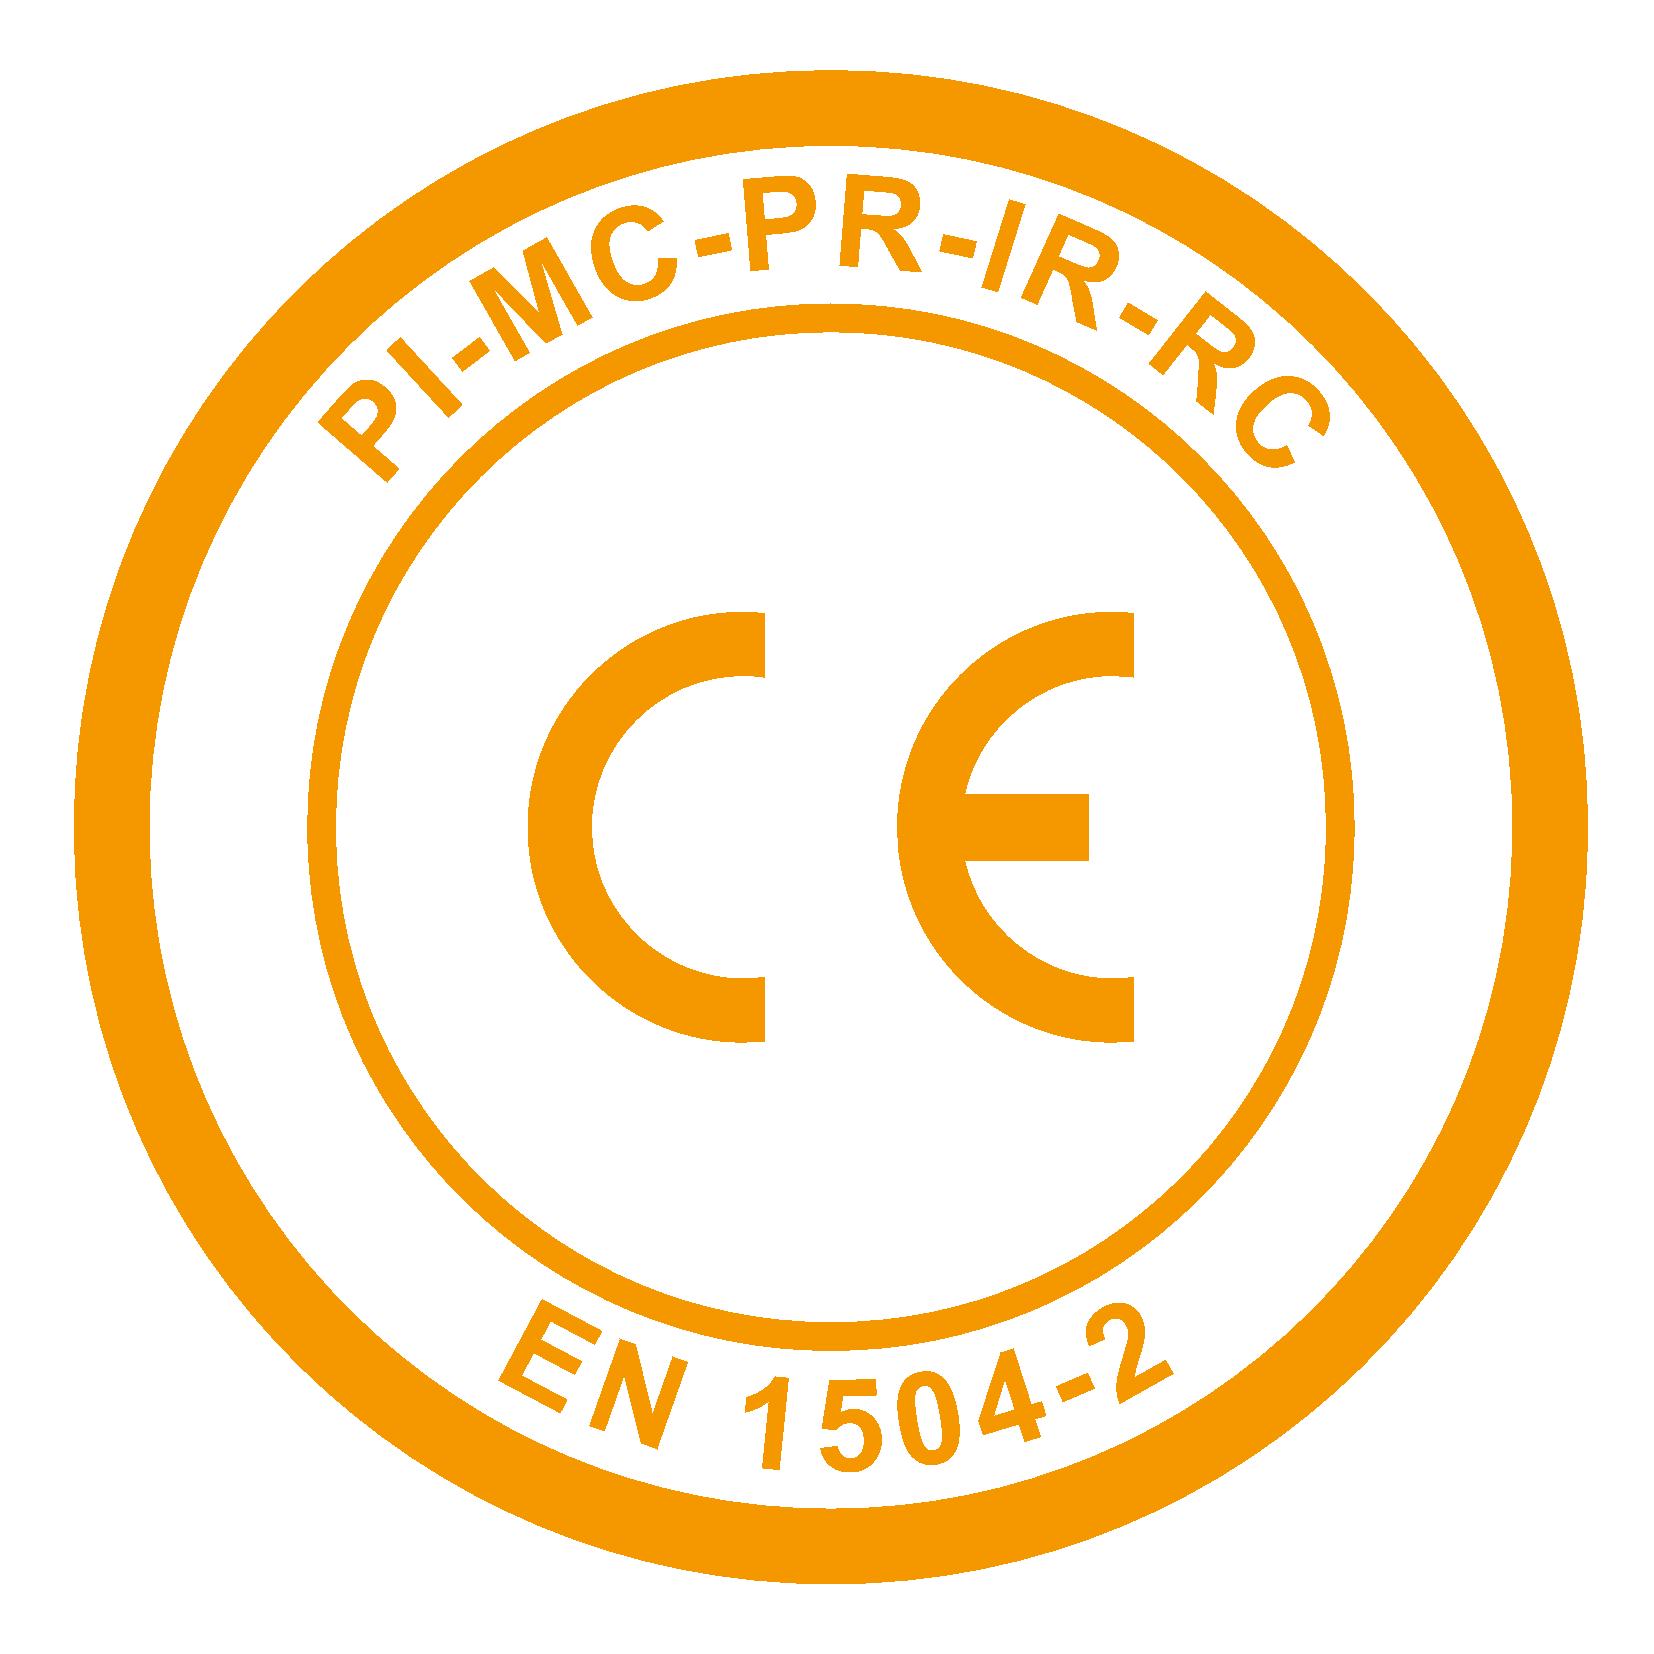 Categoria PI-MC-PR-IR-RC (UNI EN 1504-2)